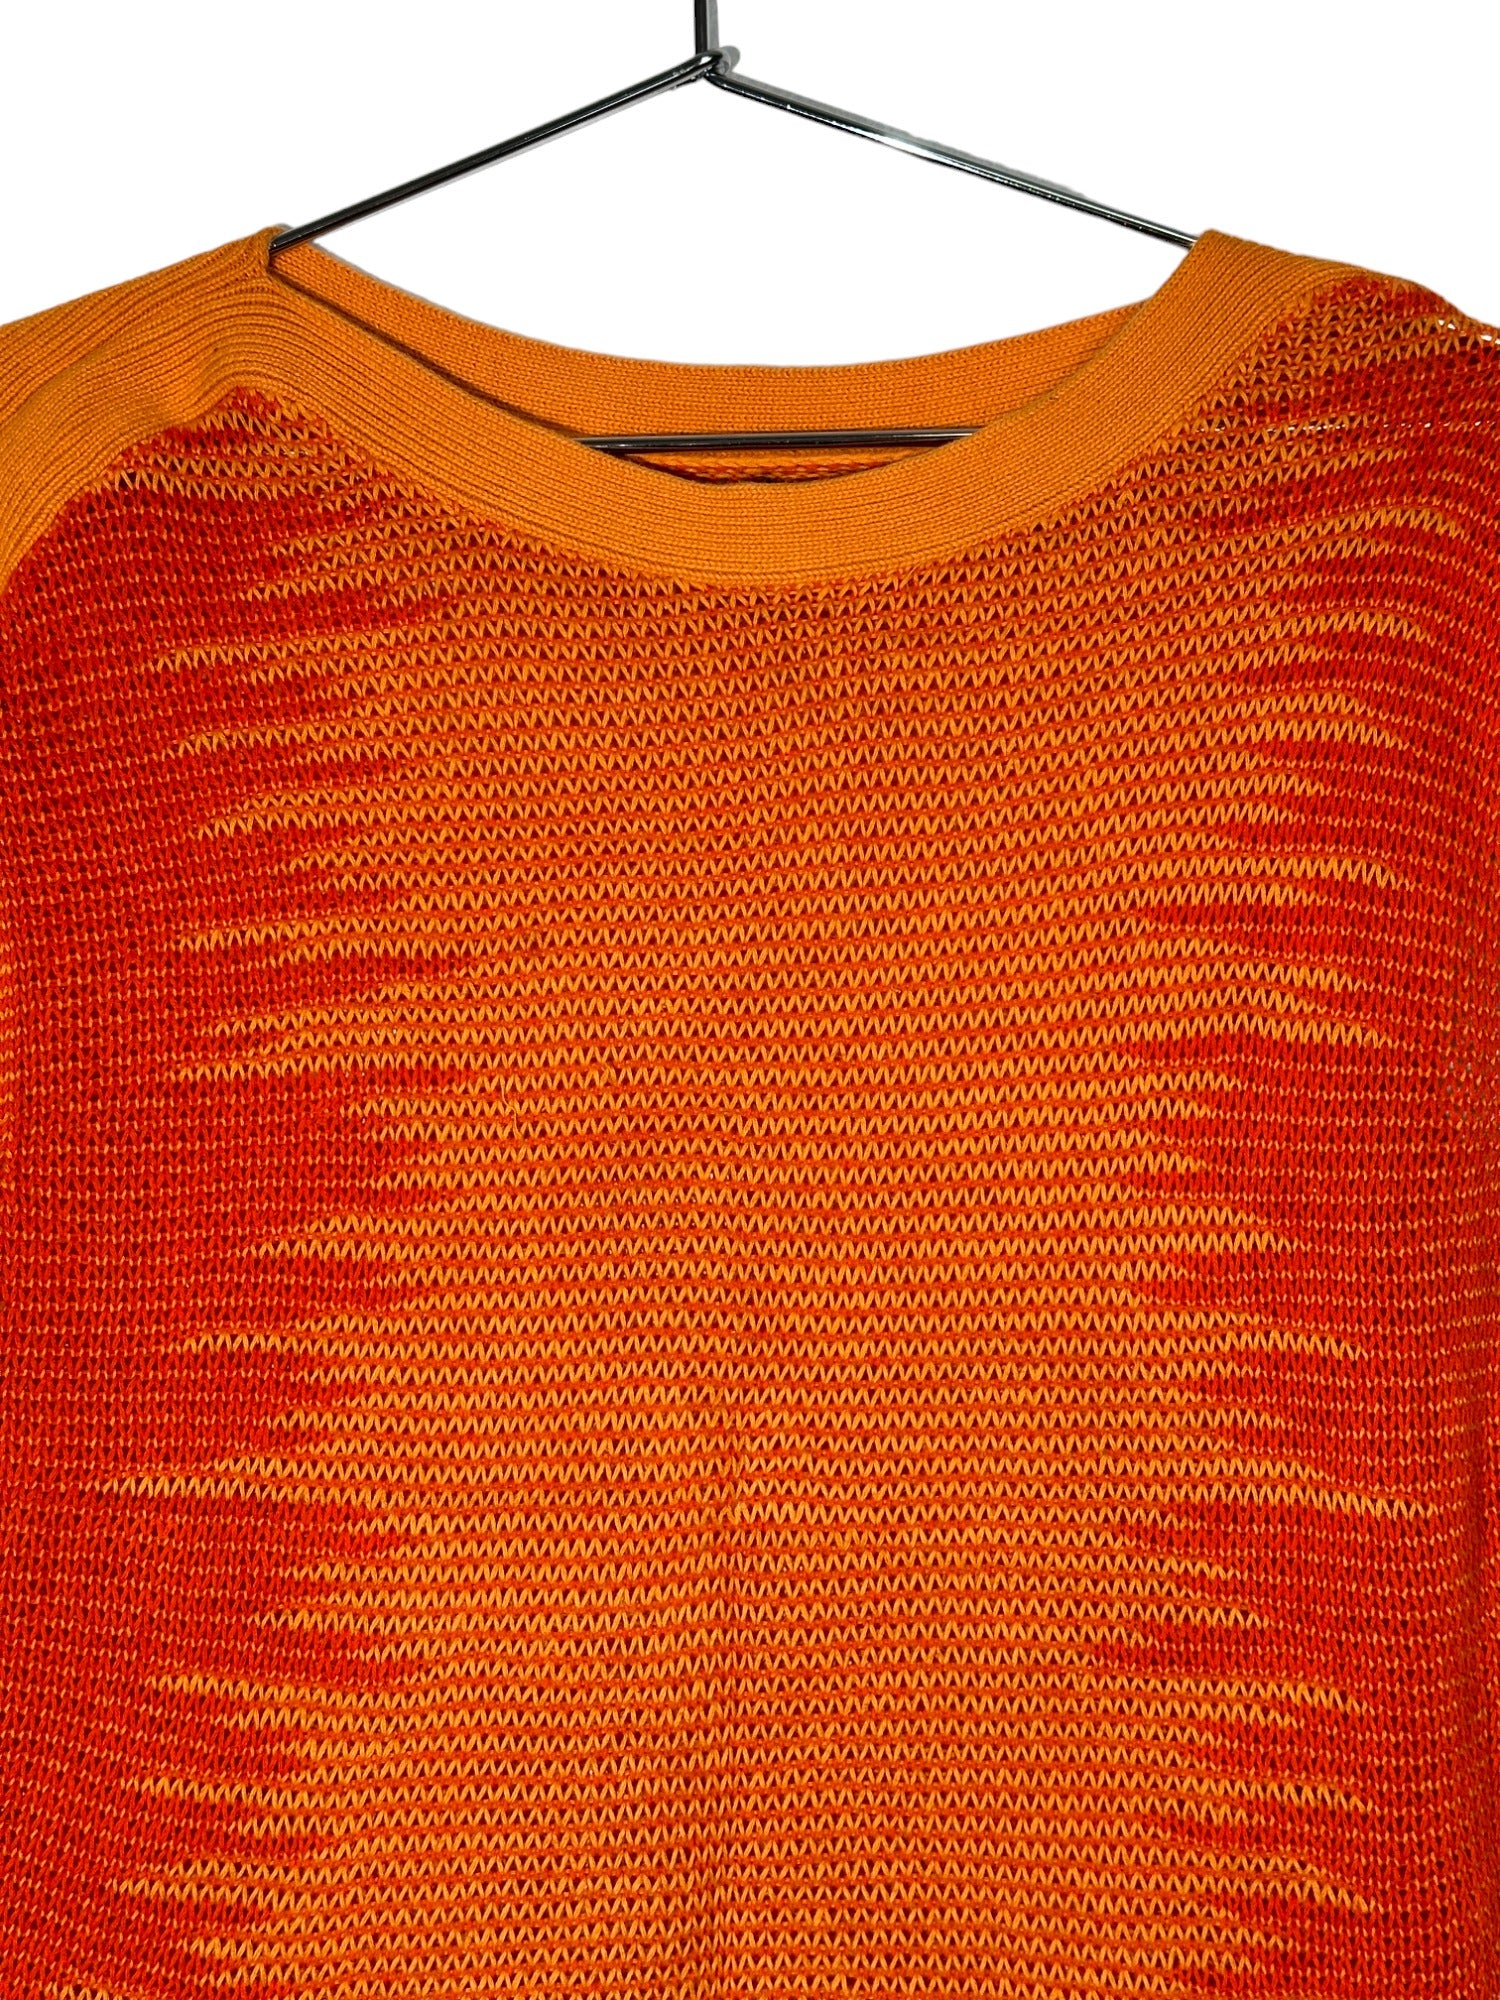 Striped Orange Short Sleeve Sweater